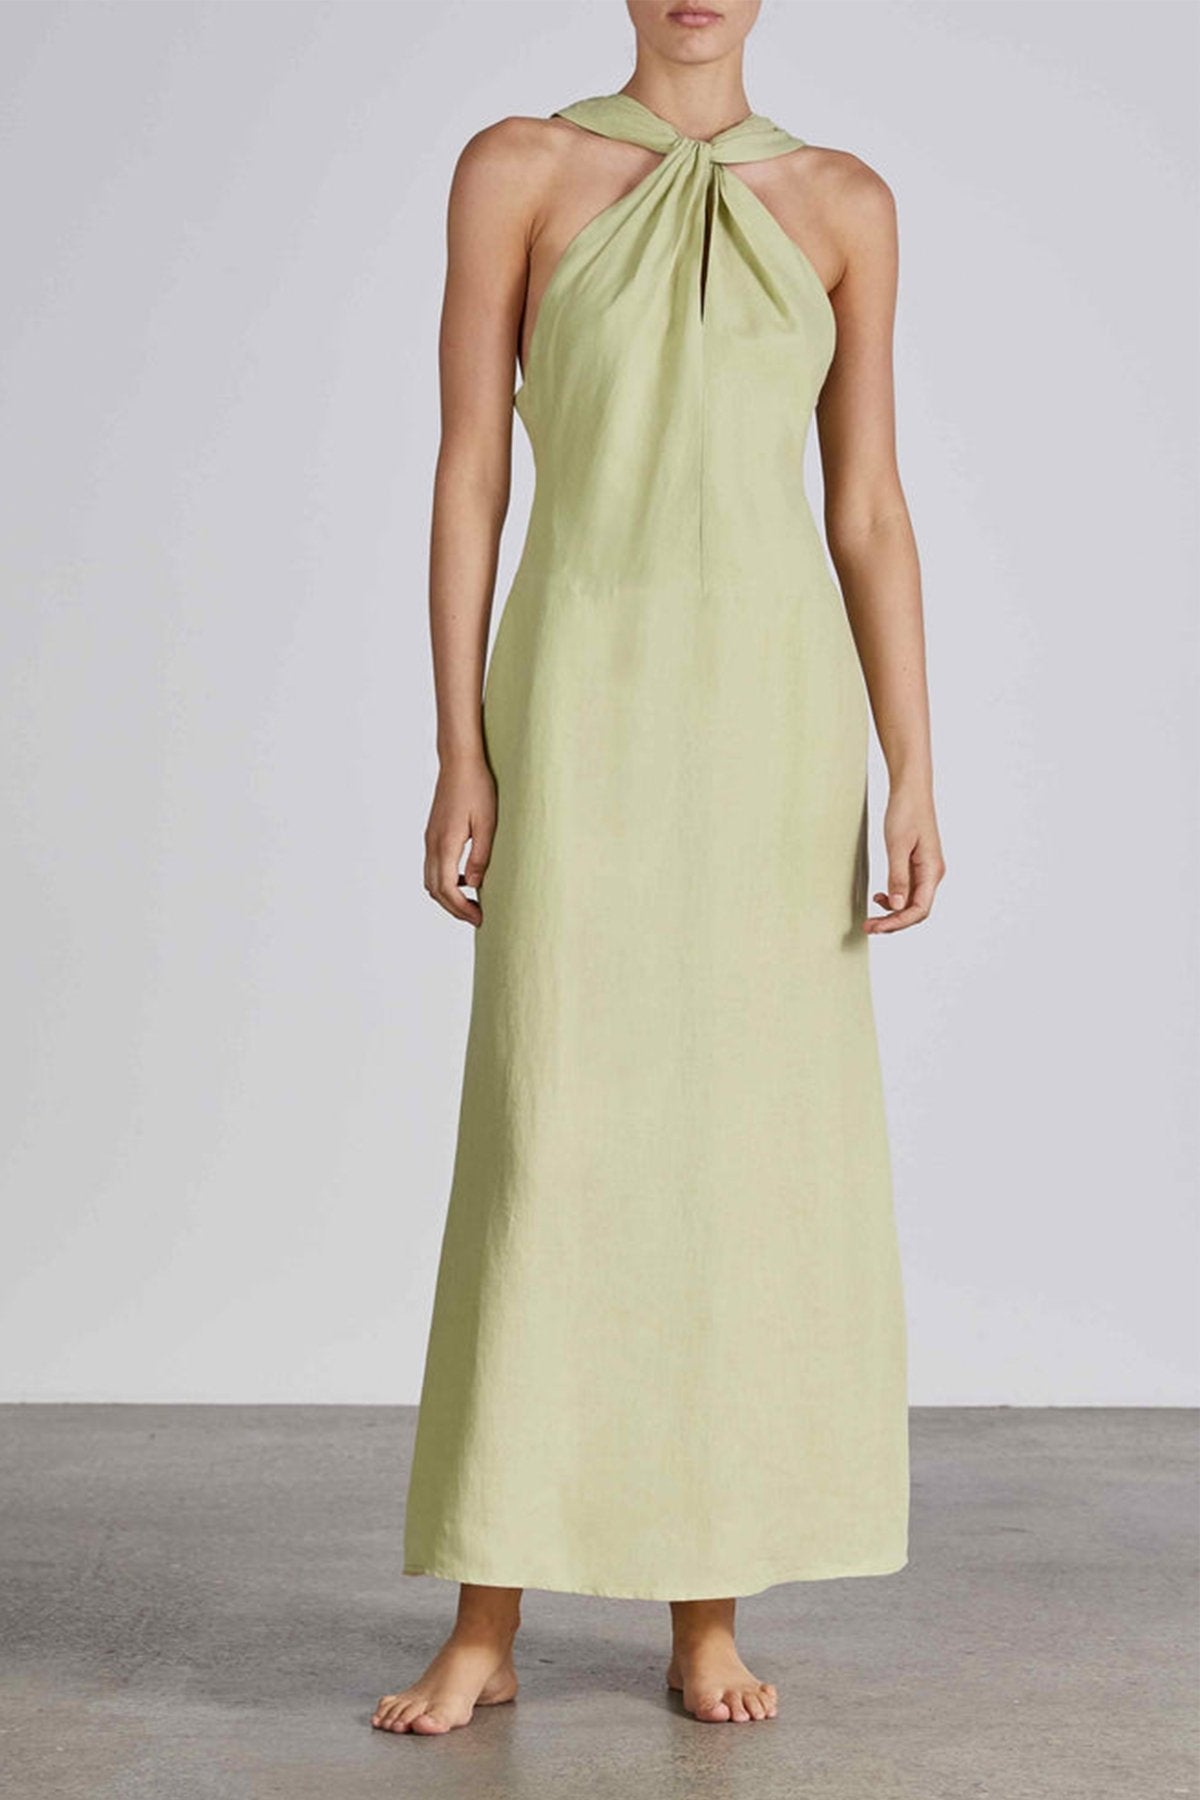 Milos Organic Linen Dress in Lime - shop-olivia.com